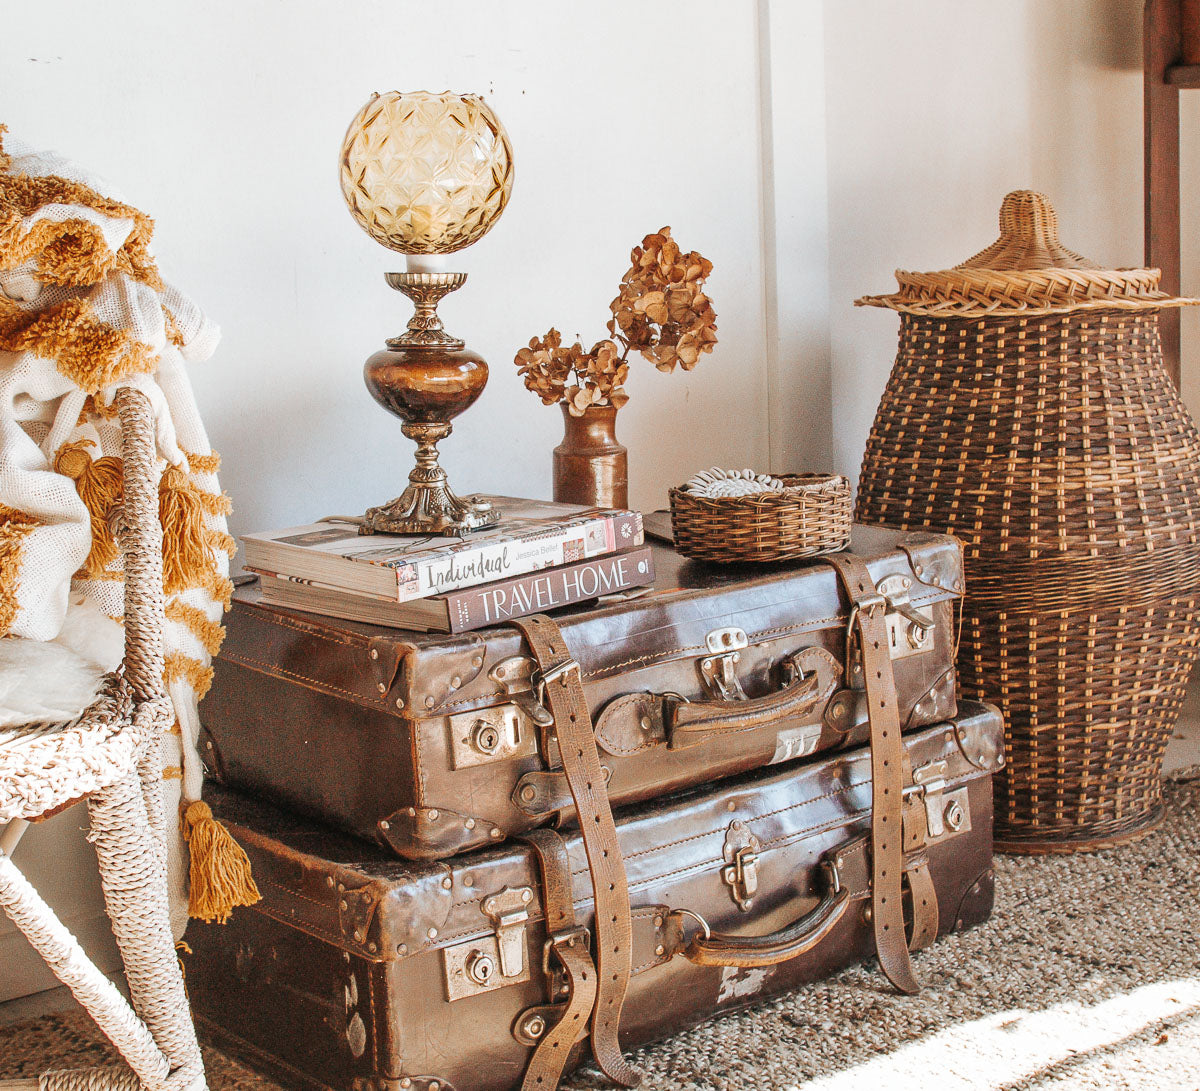 Vintage boho bohemian home decor style featuring sheepskins, vintage suitcase, cane basket and tassle throw